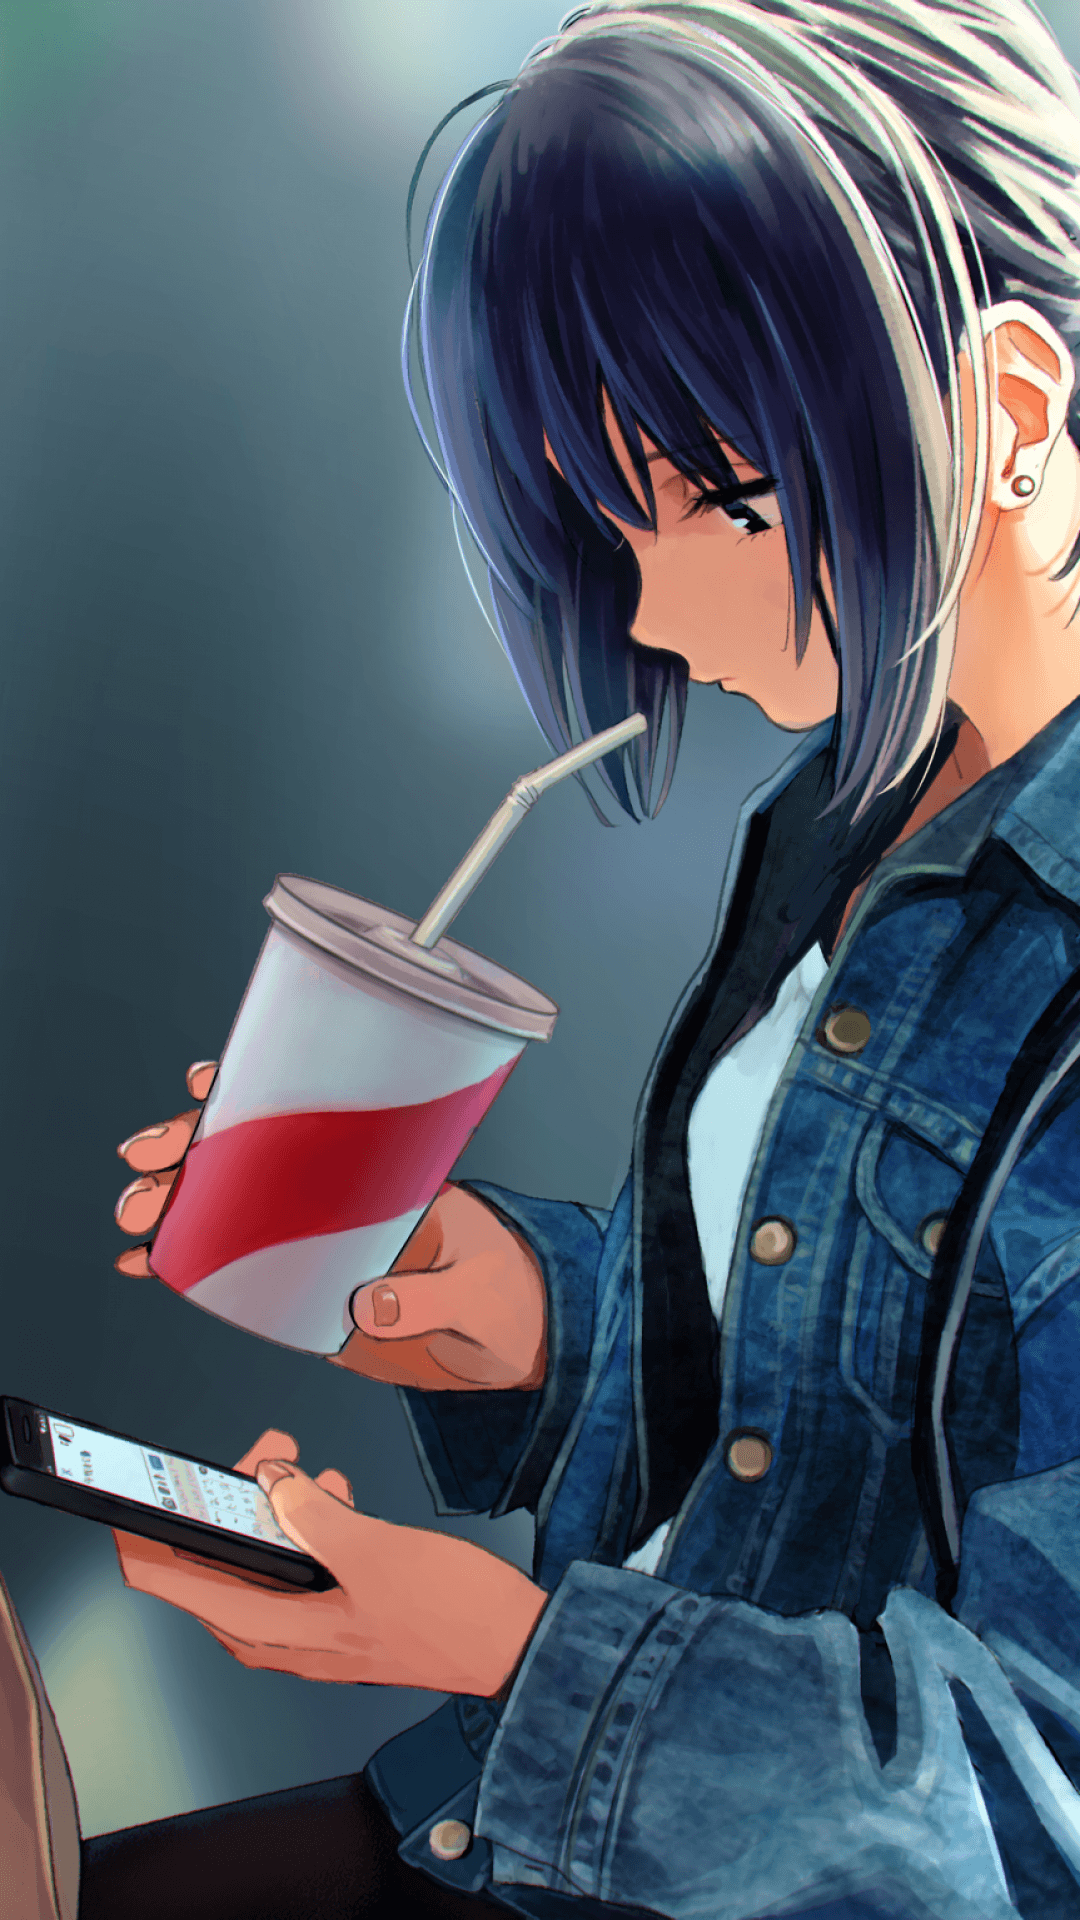 Download 1080x1920 Anime Girl, Drinking, Smartphone, Slice